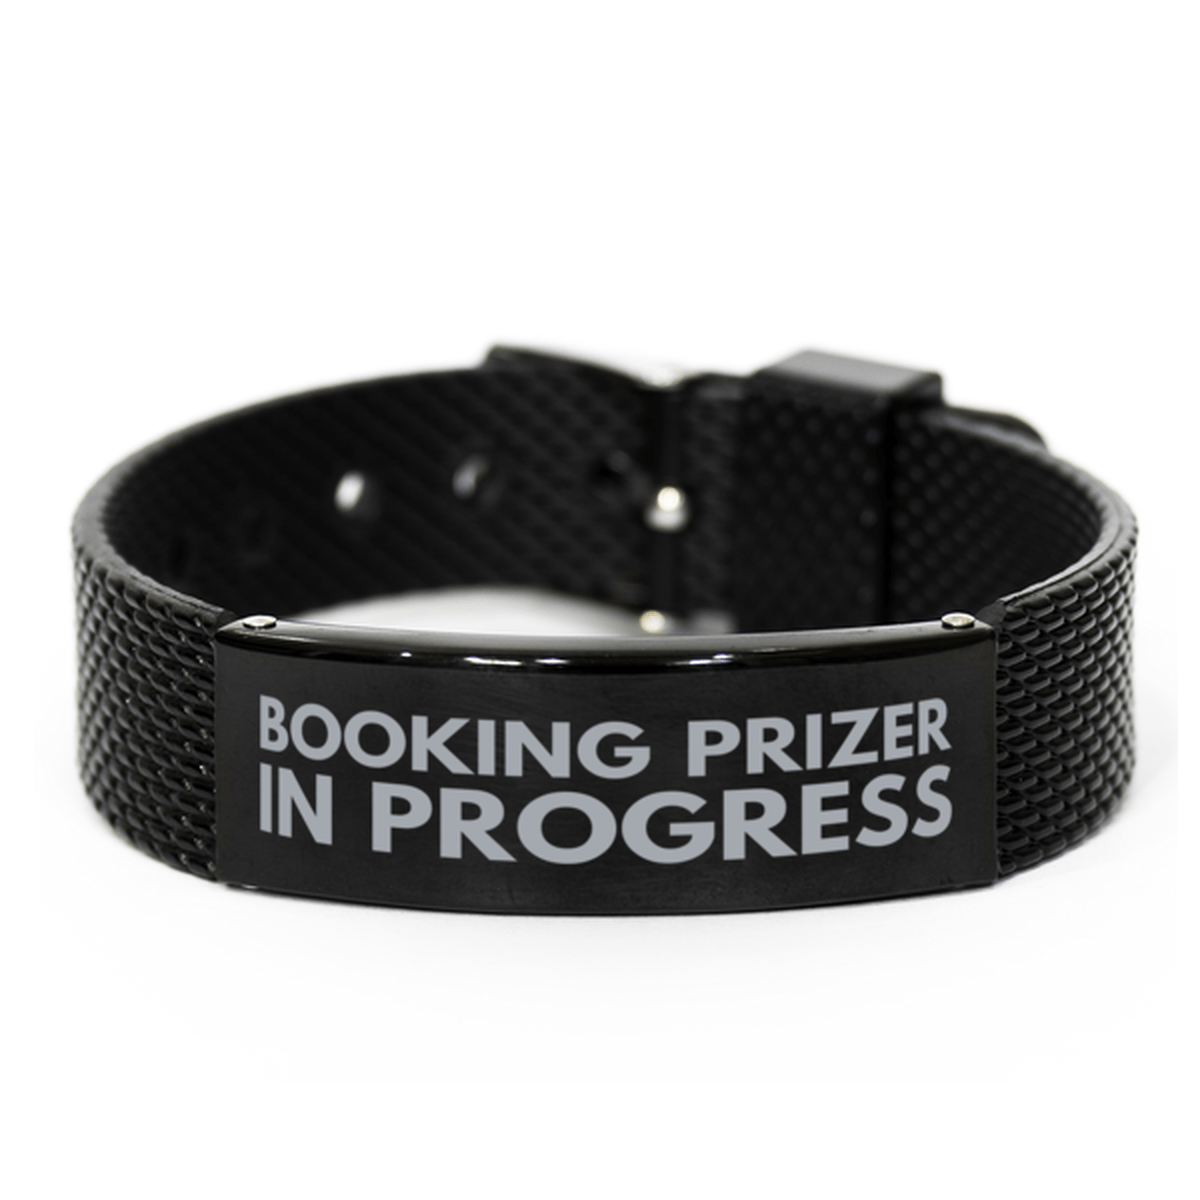 Inspirational Booking Prizer Black Shark Mesh Bracelet, Booking Prizer In Progress, Best Graduation Gifts for Students